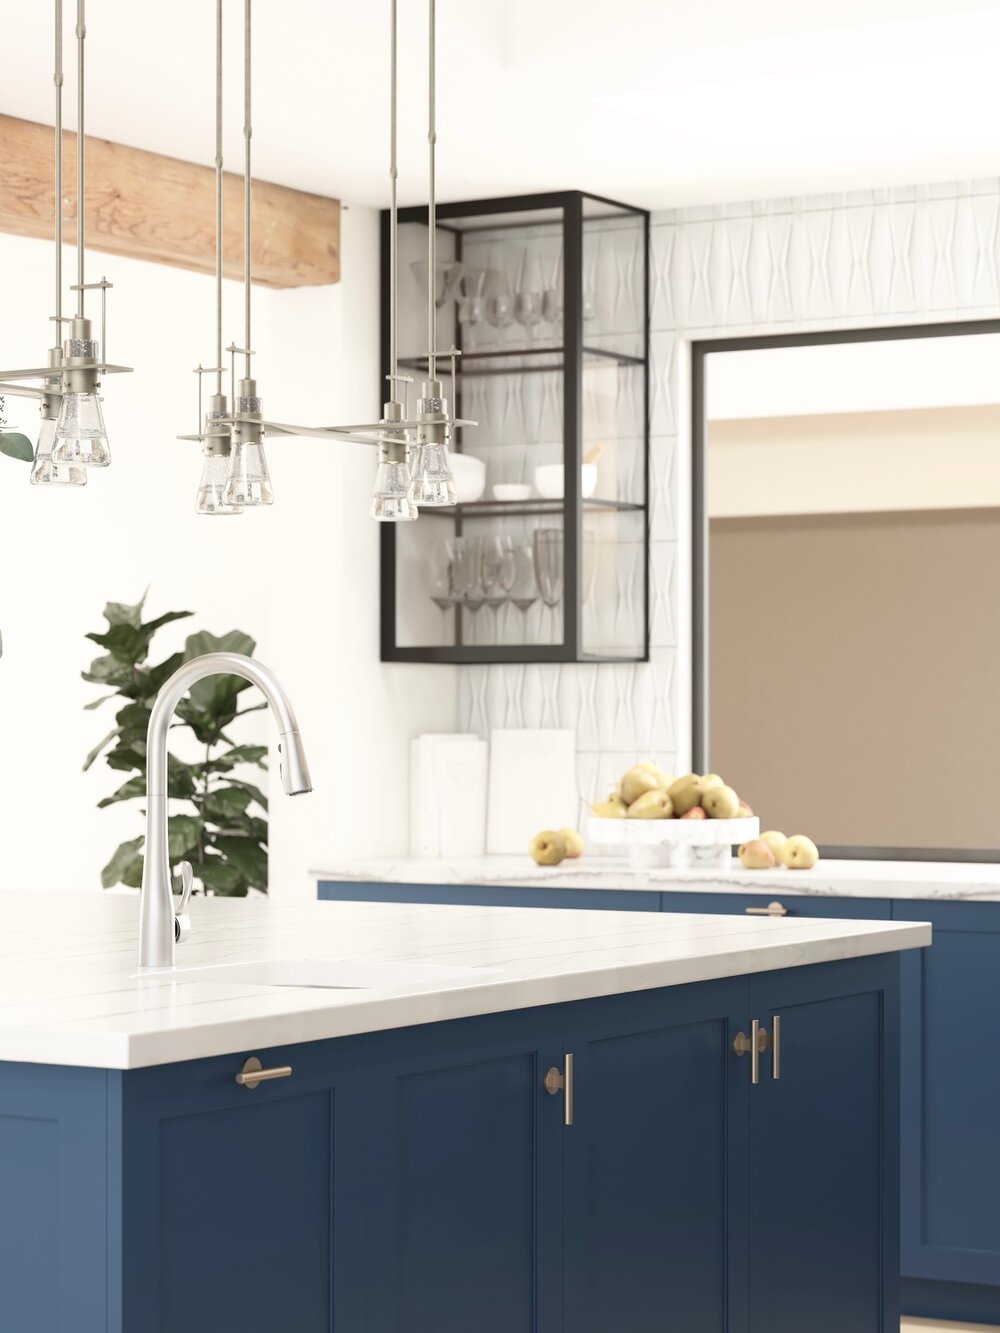 signature designs kitchens & baths. fusca kitchen view6 high res1.jpg